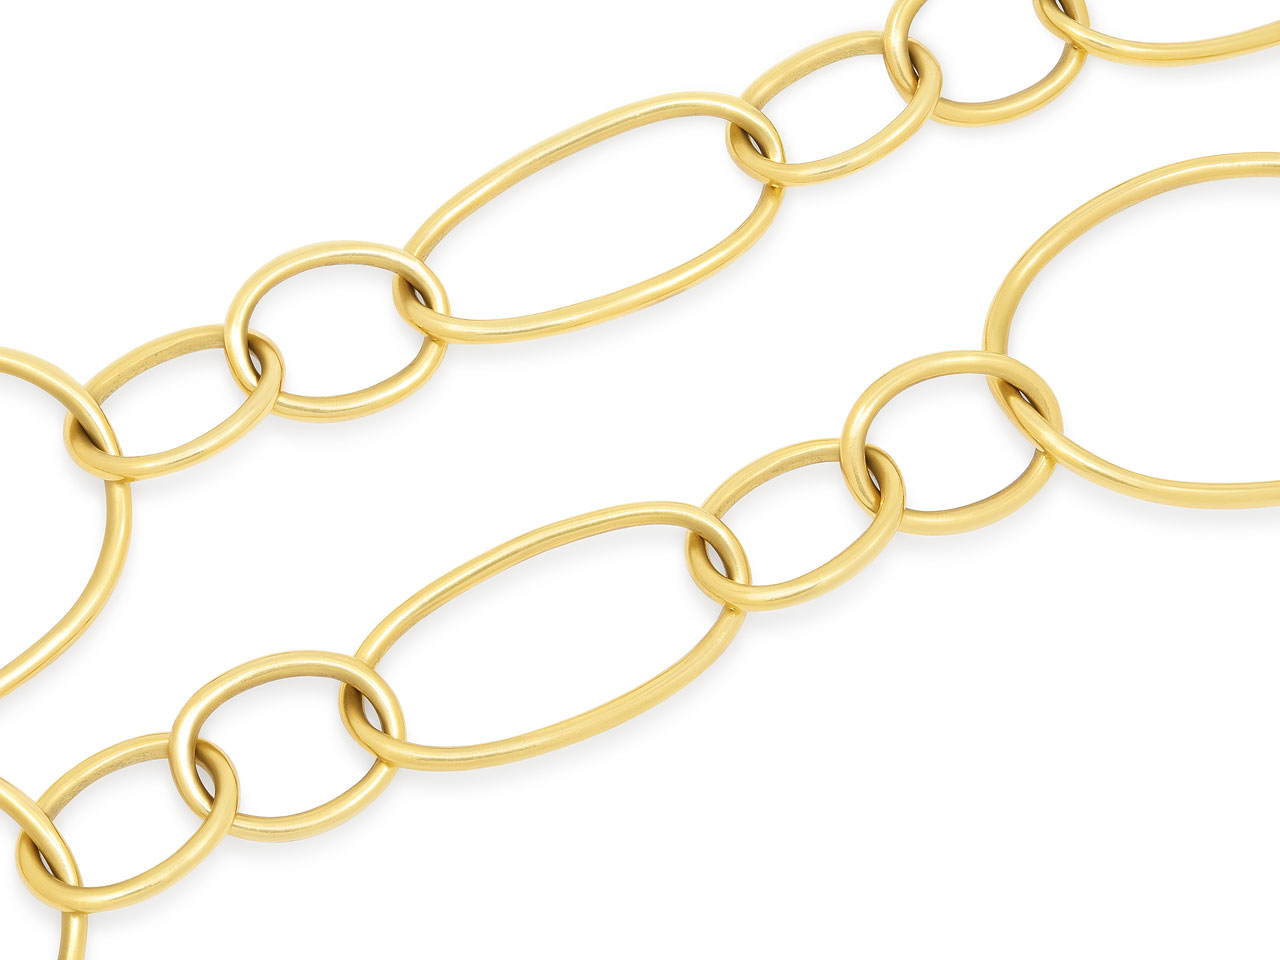 Multi-Link Necklace in 18K Gold